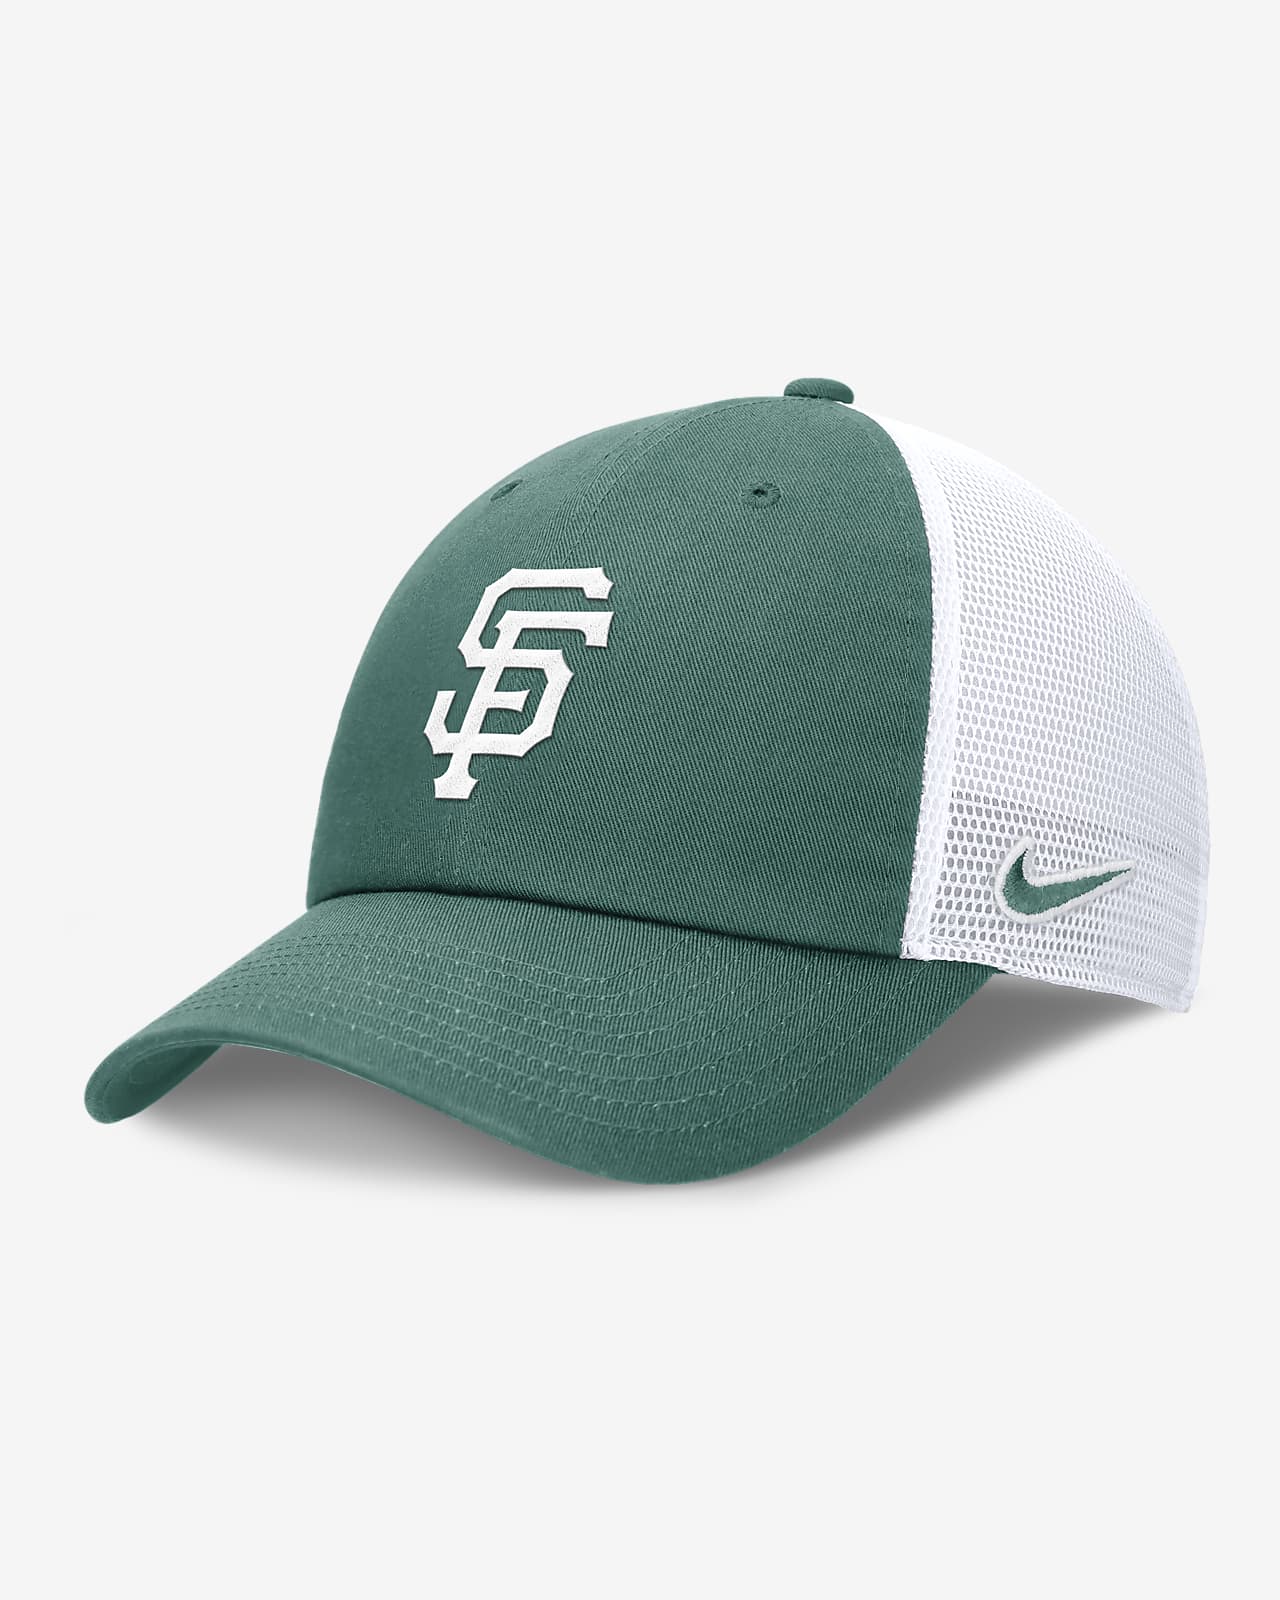 Gorra de rejilla Nike de la MLB ajustable para hombre San Francisco Giants Bicoastal Club